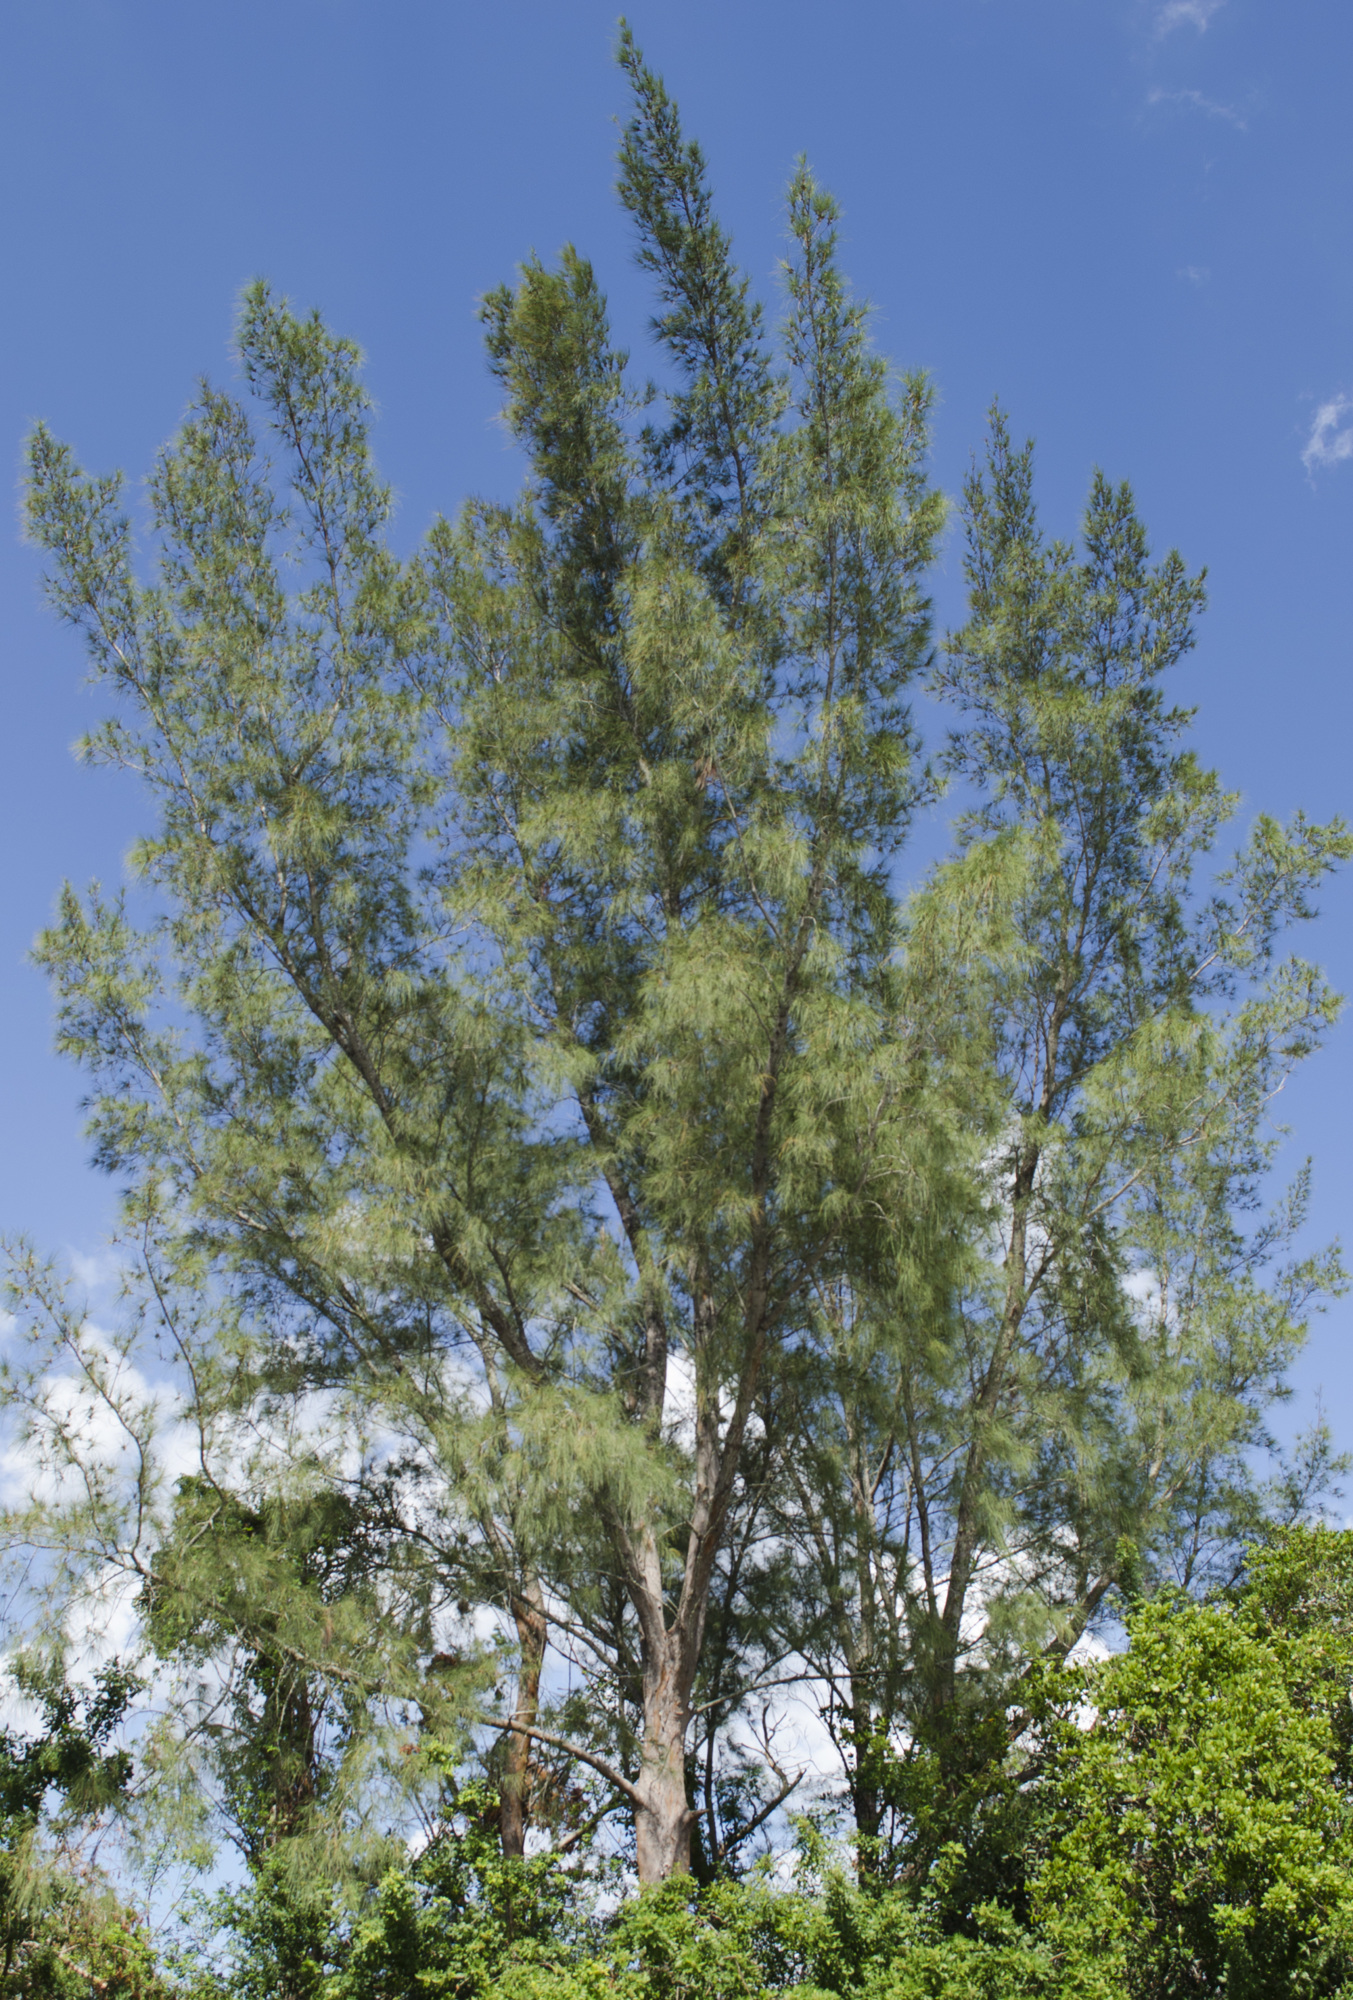 Australian pines often tower over native plant life, denying local flora vital sunshine. 